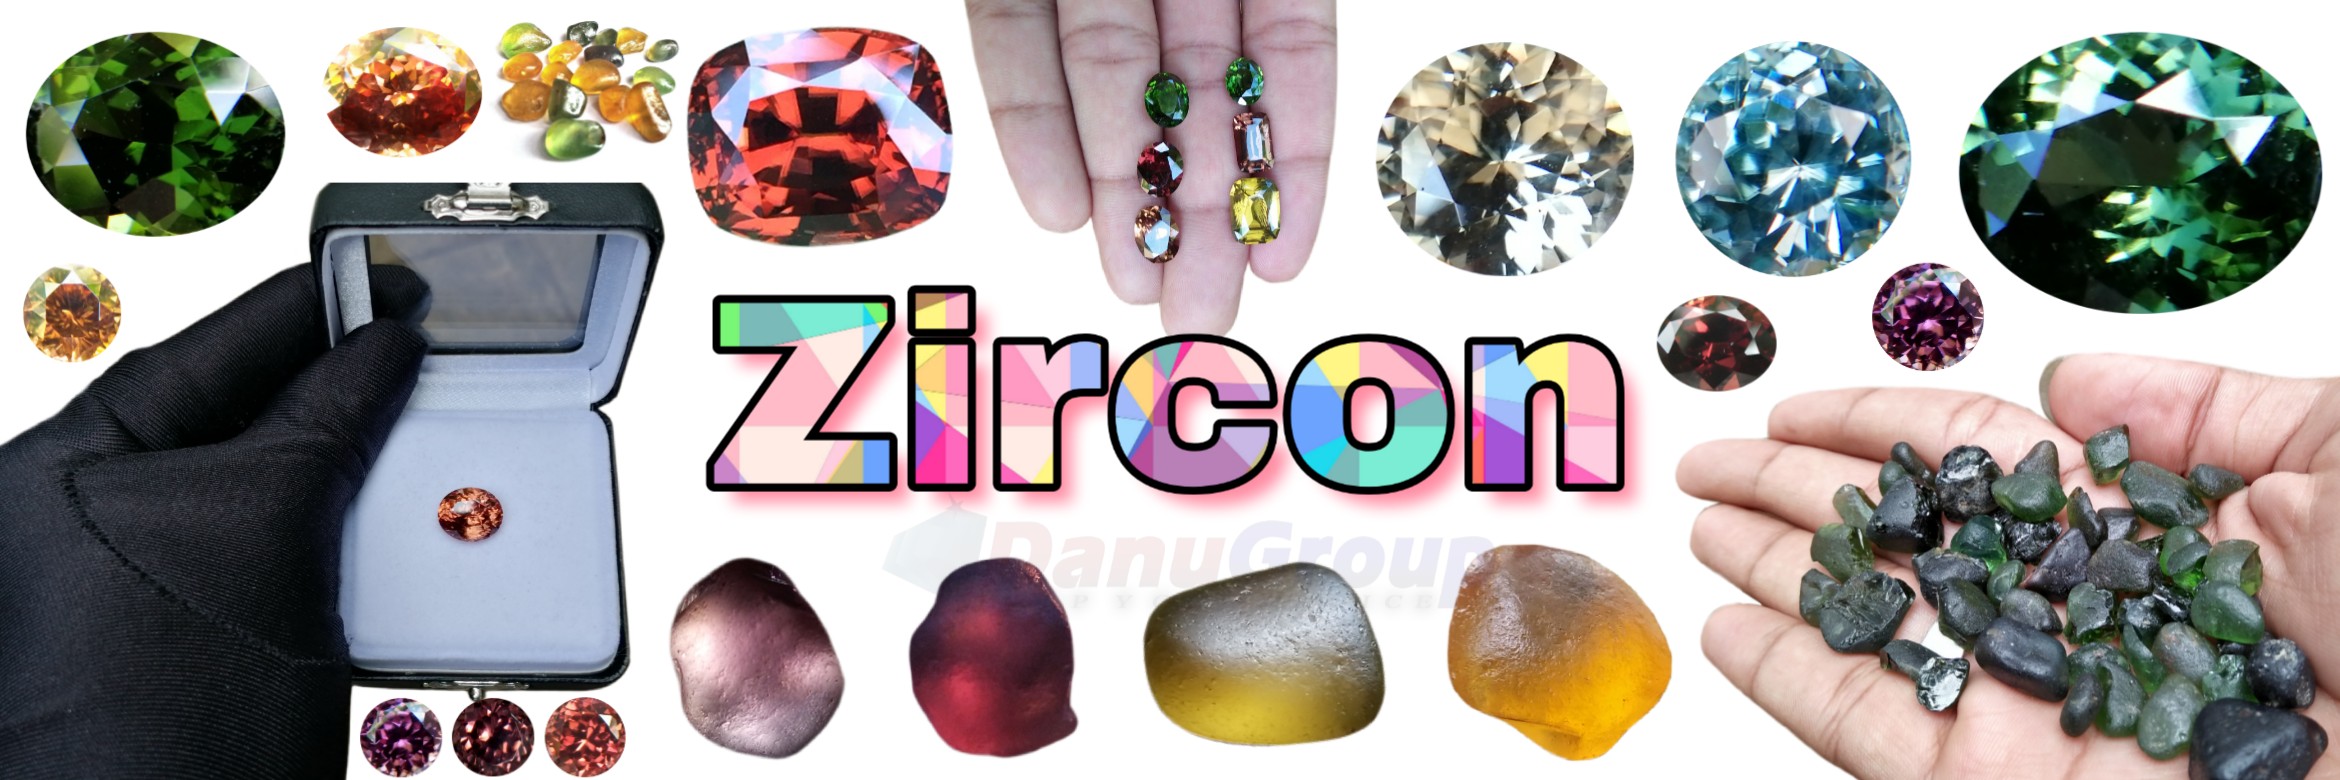 zircon gemstone - Danu Group A